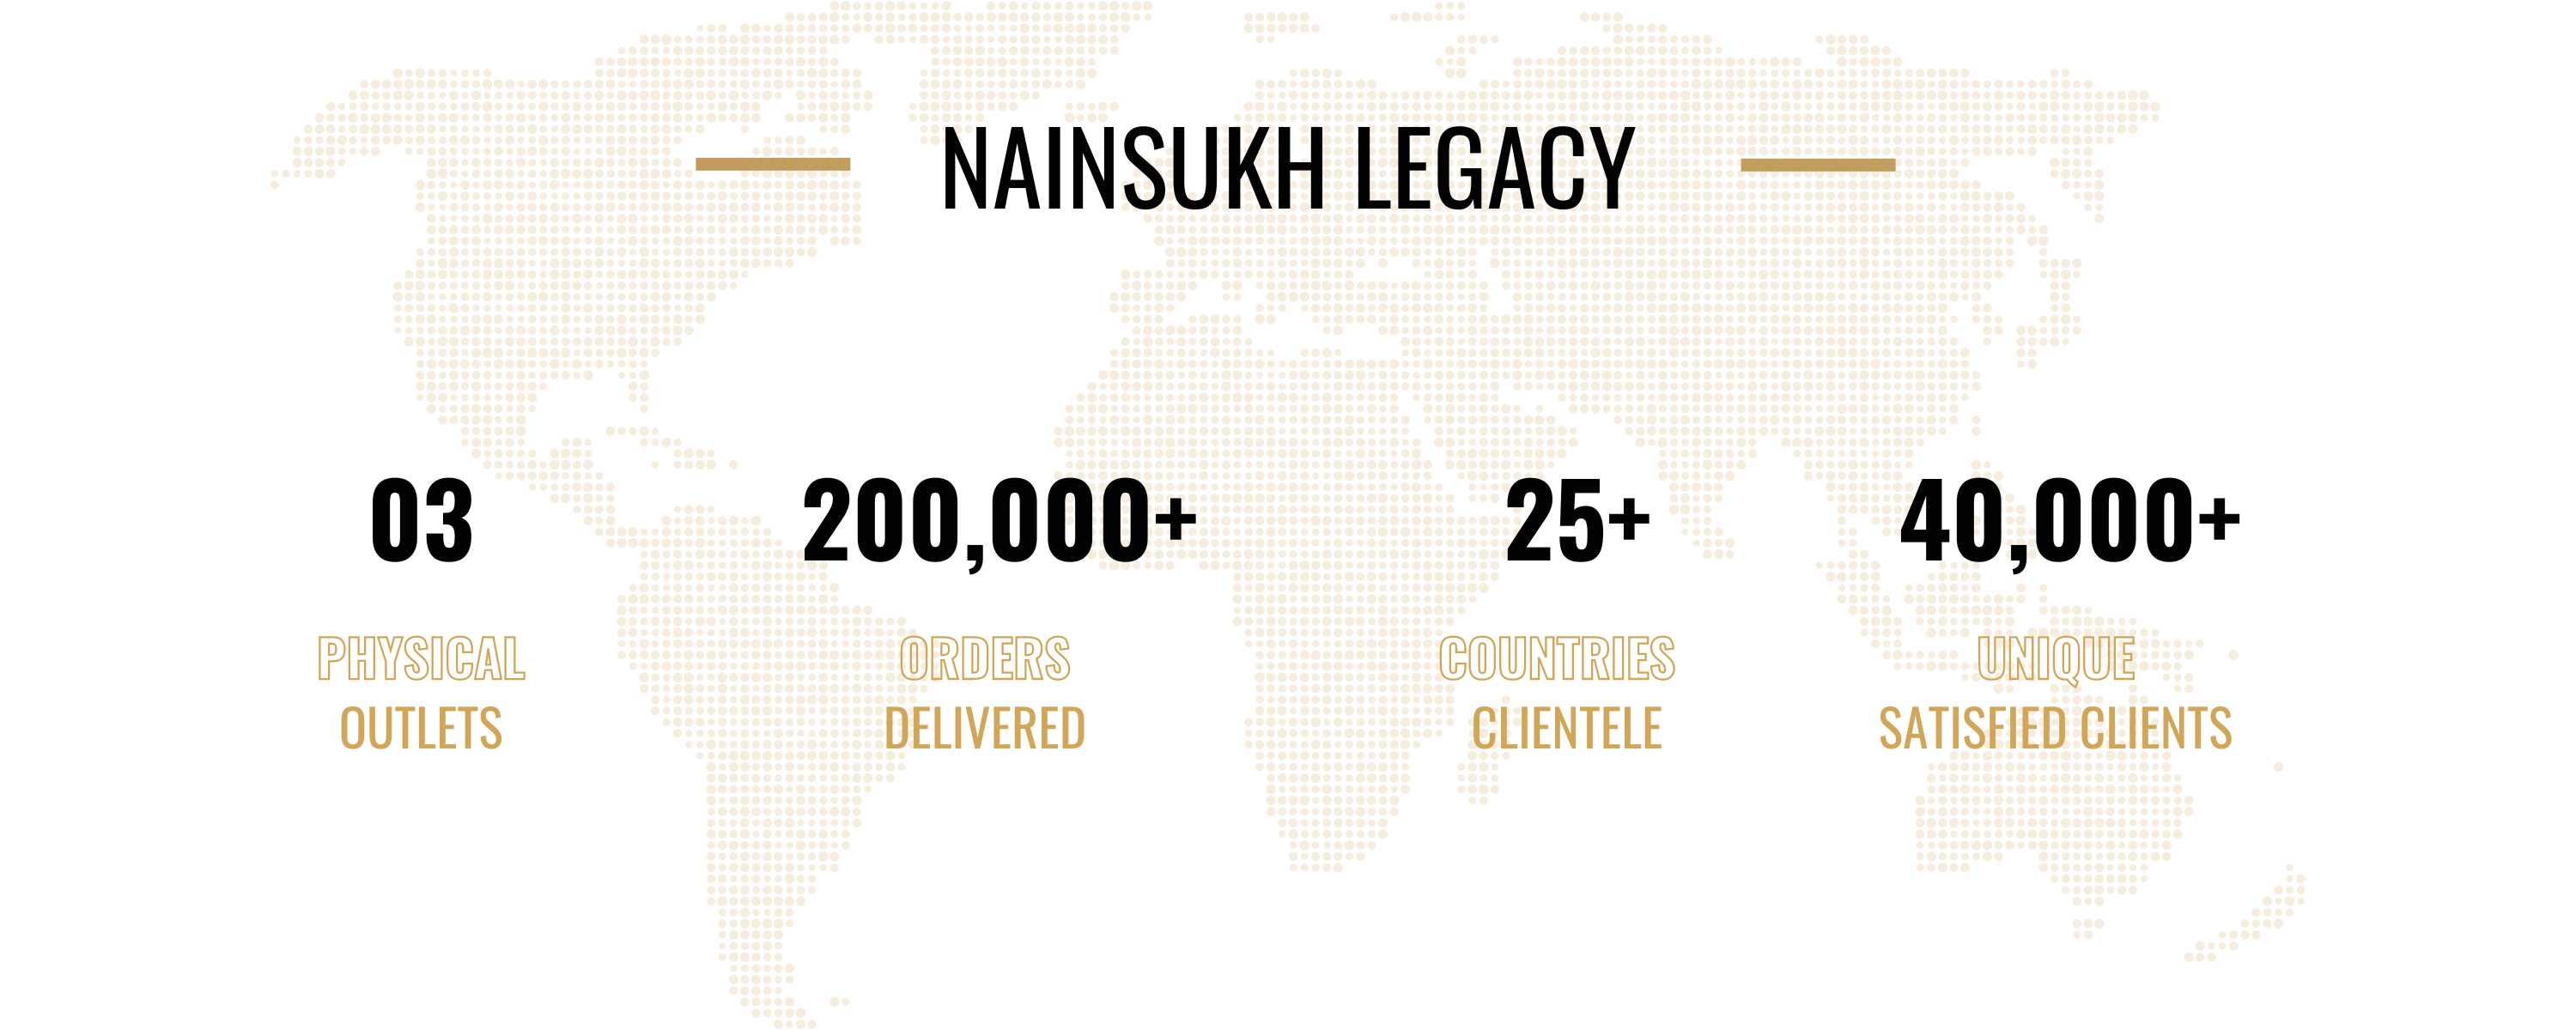 Nainsukh legacy